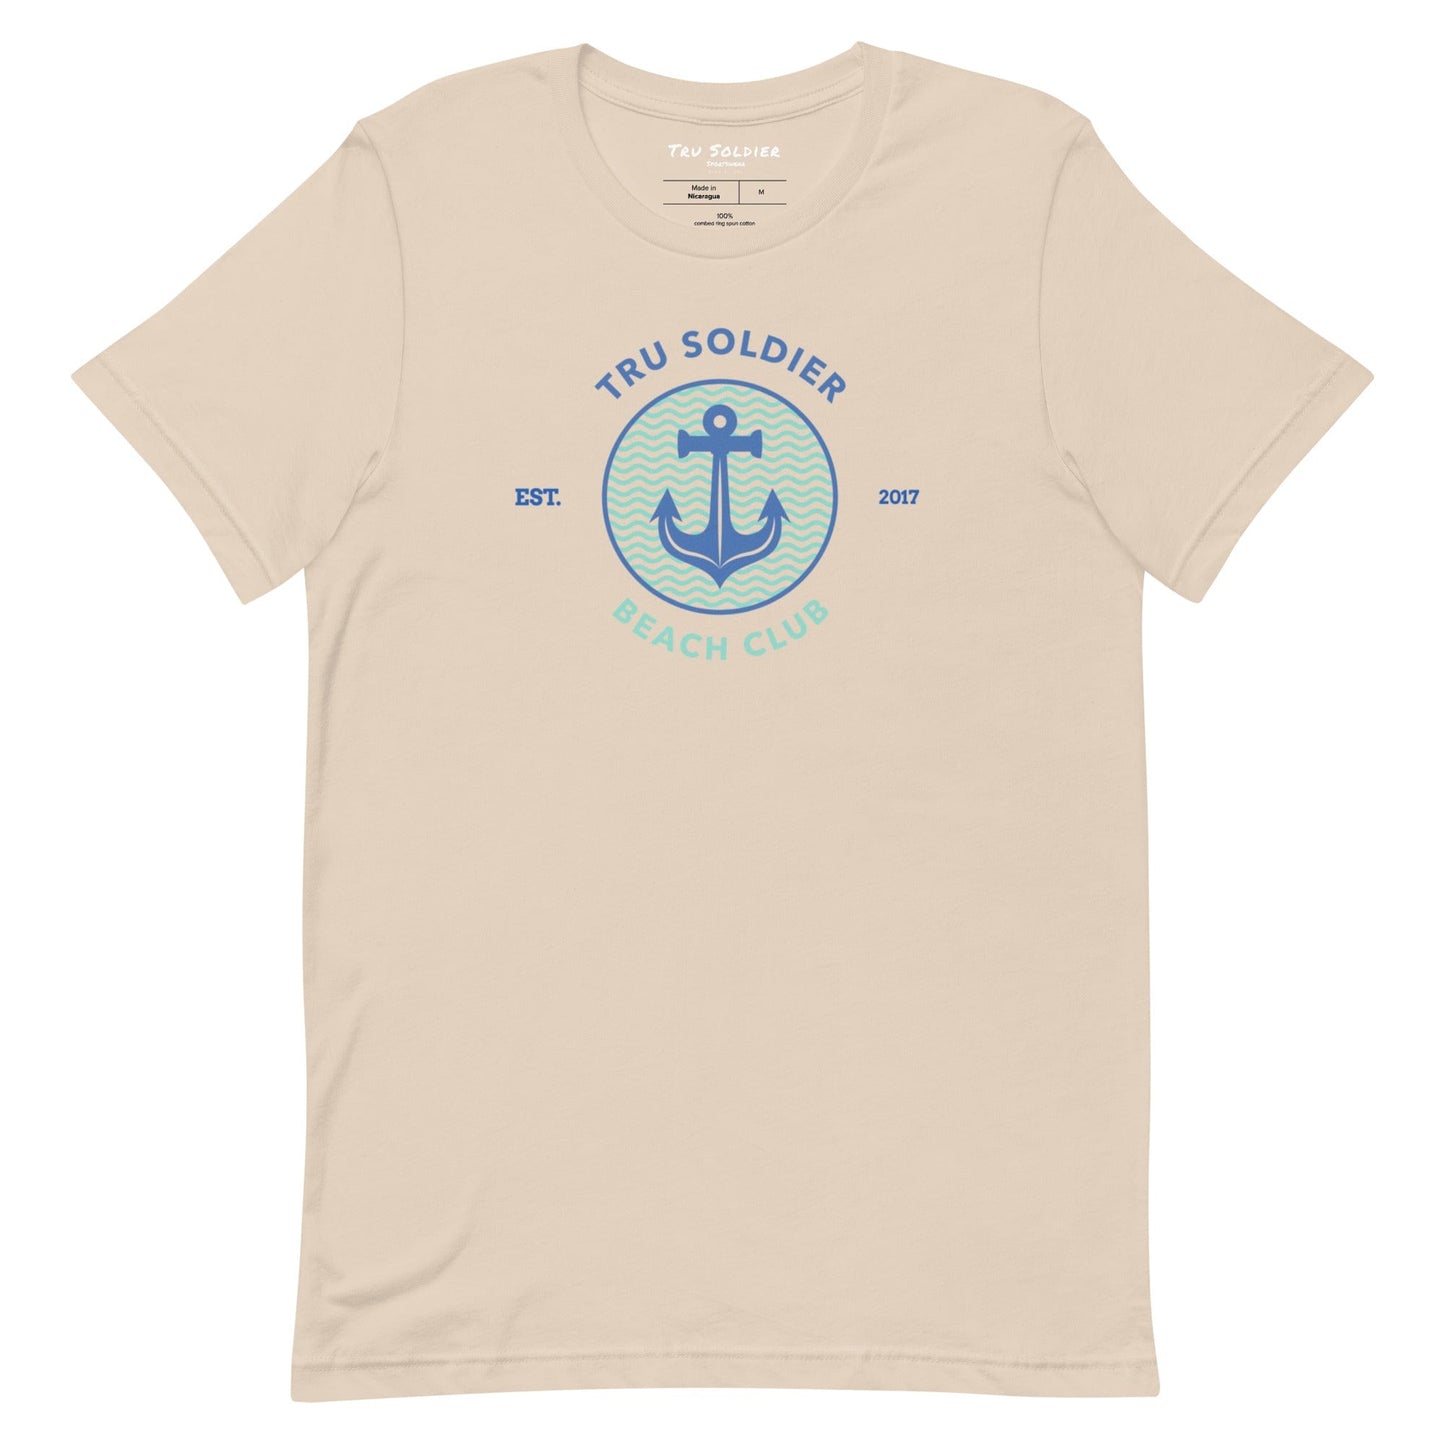 Tru Soldier Sportswear  Soft Cream / XS Tru Soldier Beach Club t-shirt